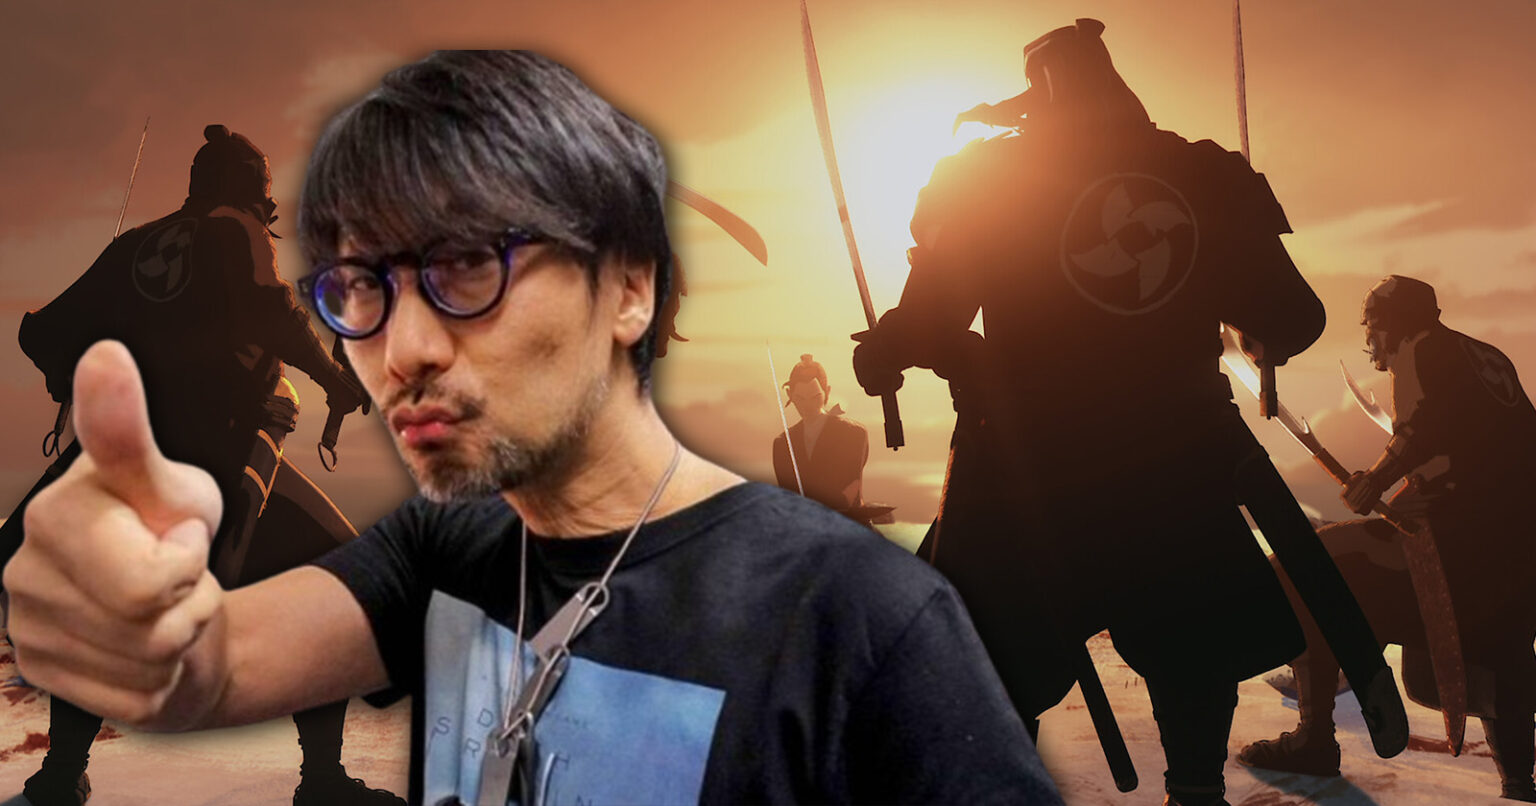 Legendary game designer Hideo Kojima's documentary is coming to